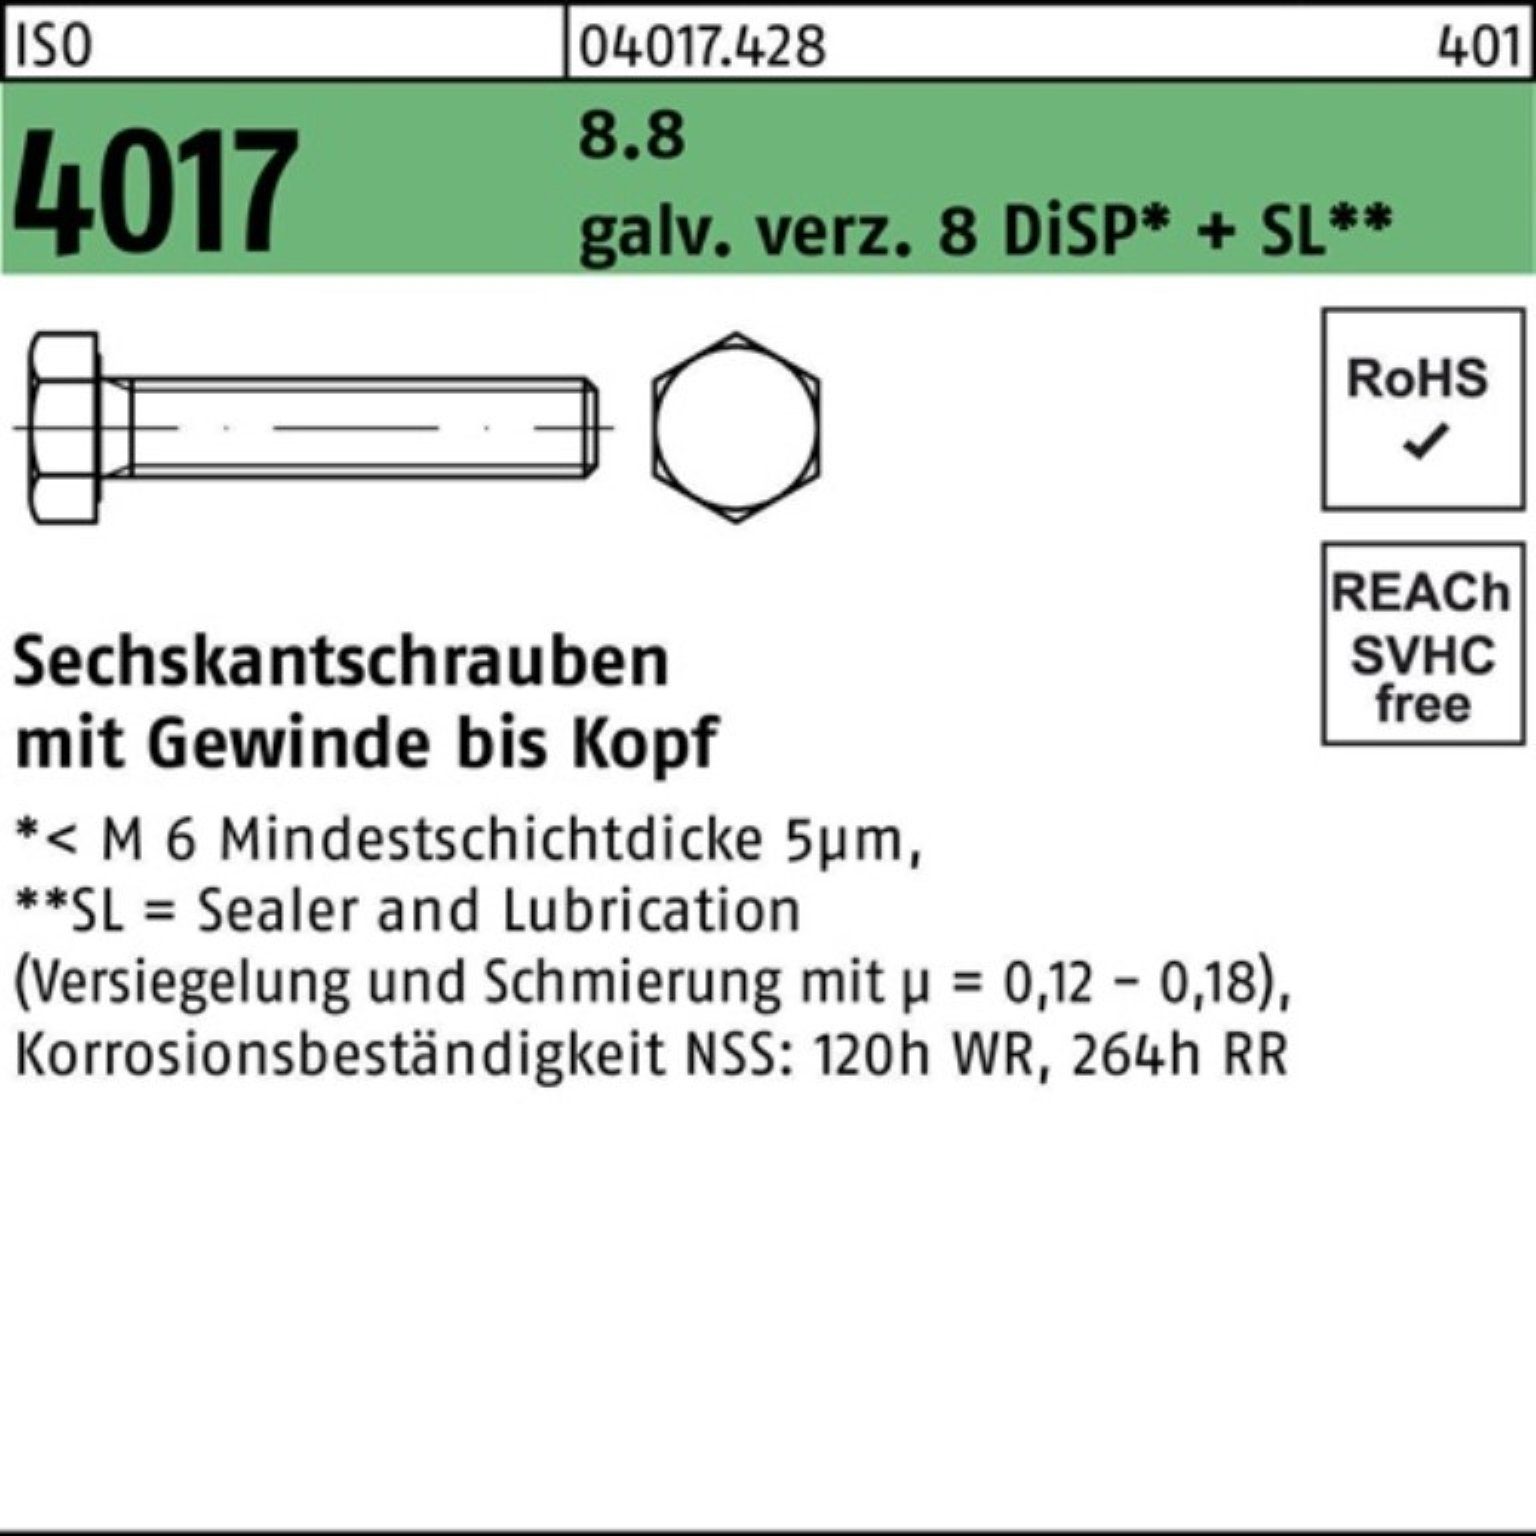 Bufab Sechskantschraube 100er Pack Sechskantschraube ISO 4017 VG M20x 100 8.8 galv.verz. 8 DiS